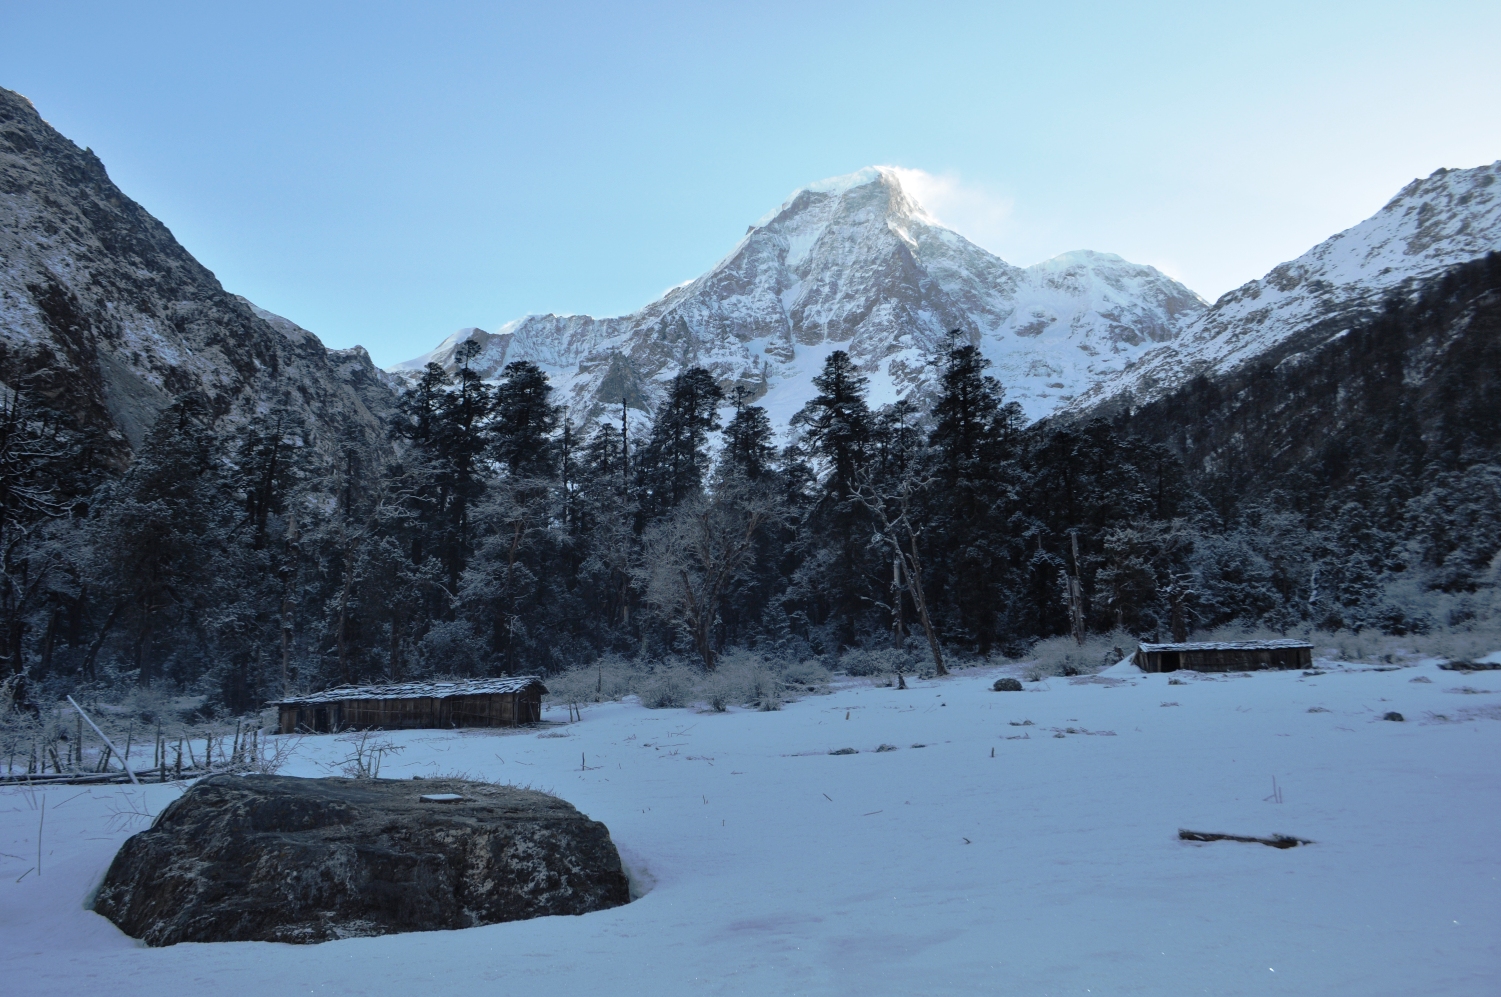 Nepal opens Jugal mountain range for climbing